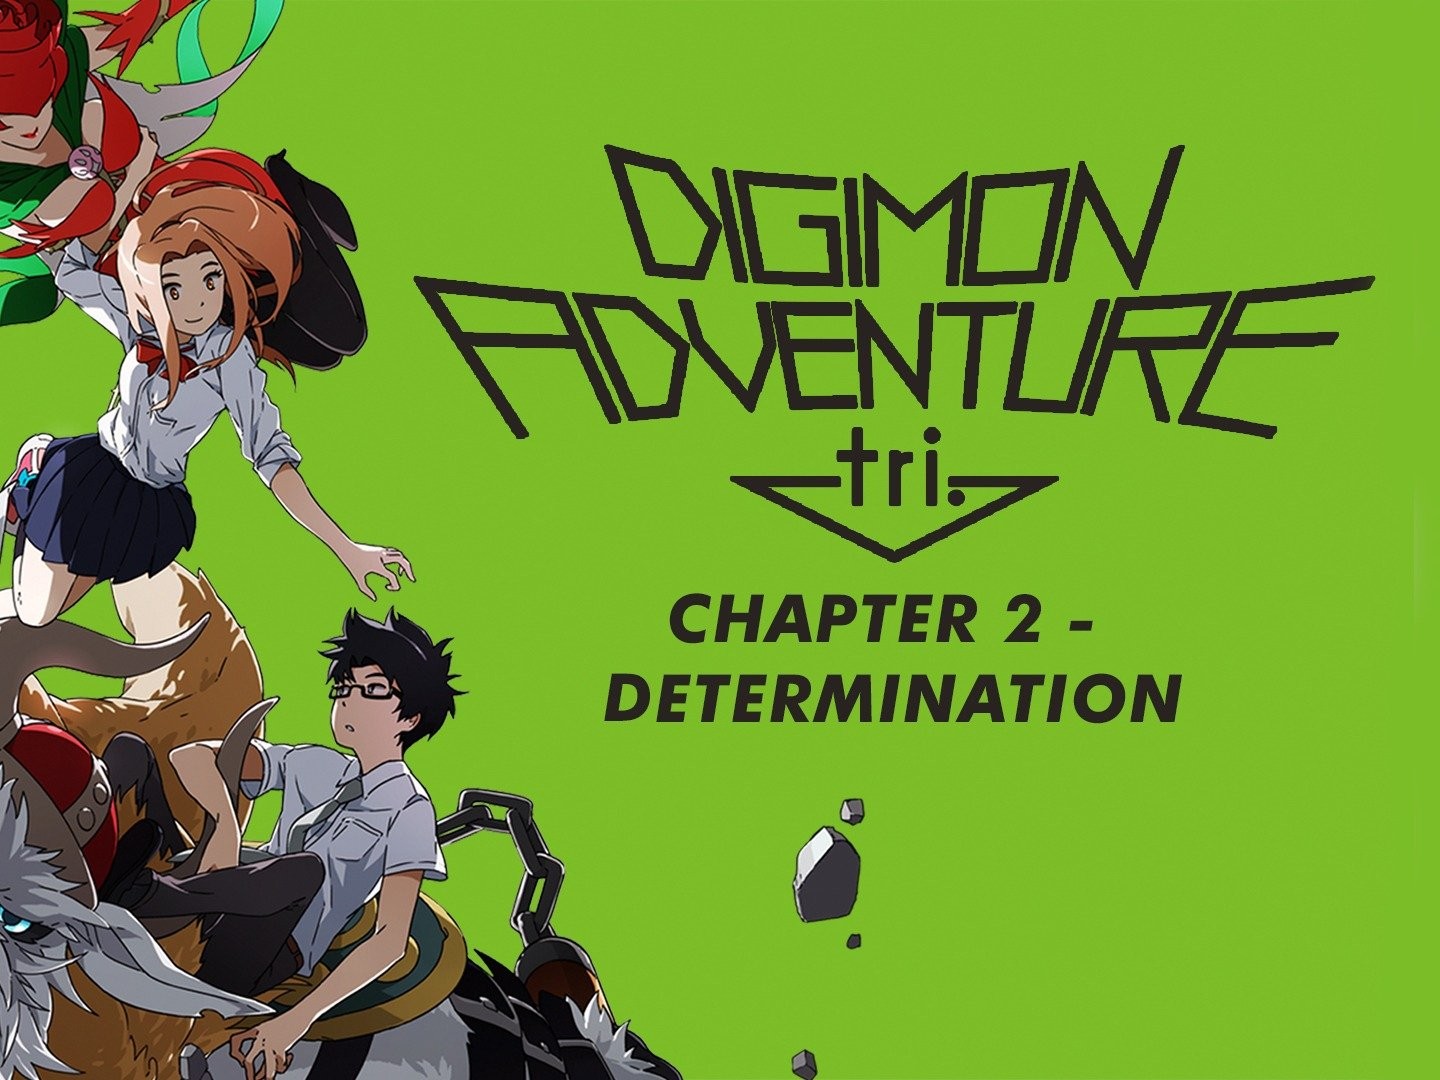 Digimon Adventure tri: Determination Movie Review